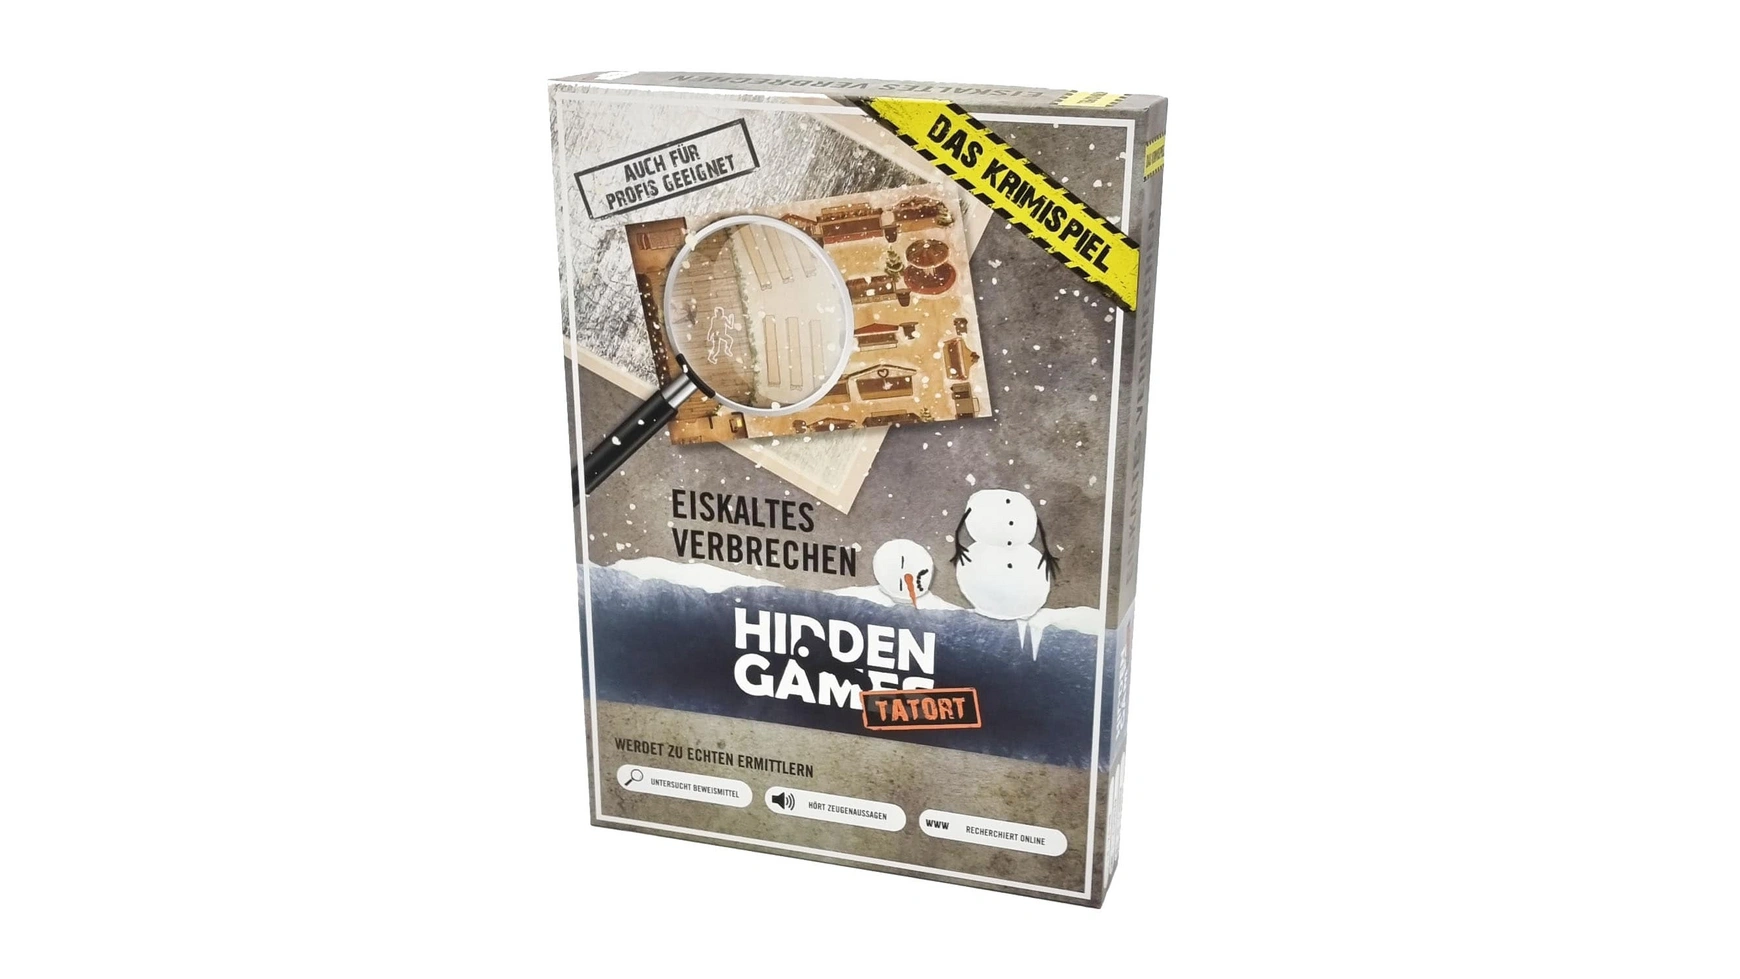 Hidden Games Tatort Ледяное Преступление, шестое дело